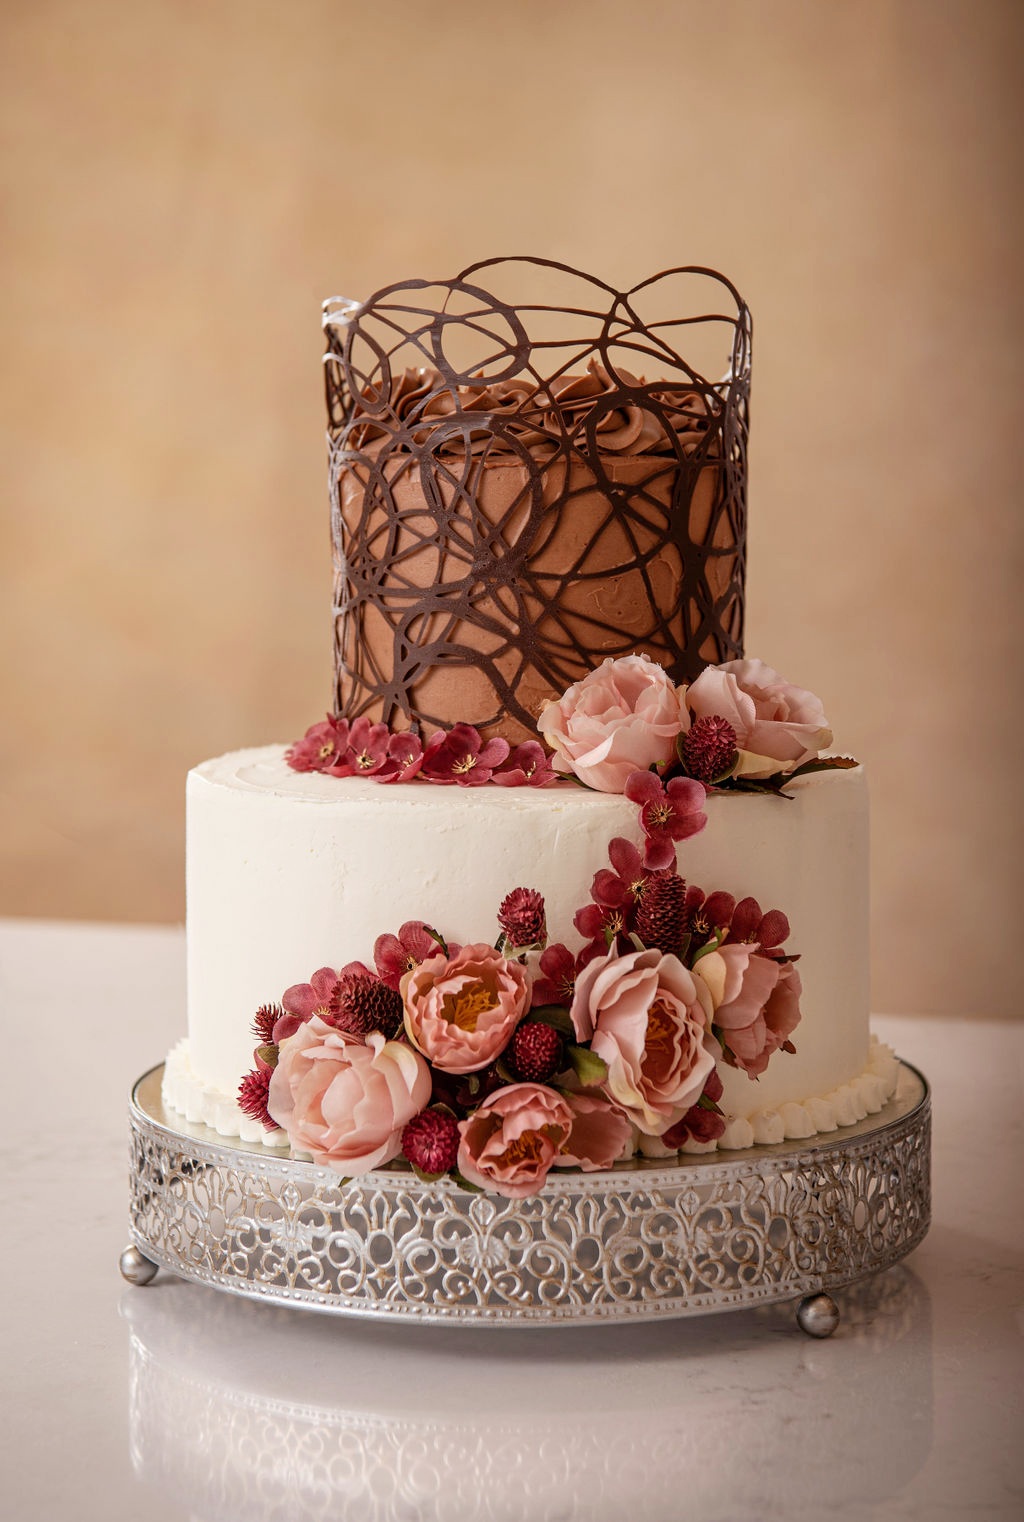 EastLeigh Desserts Nashville Wedding Cakes and Desserts